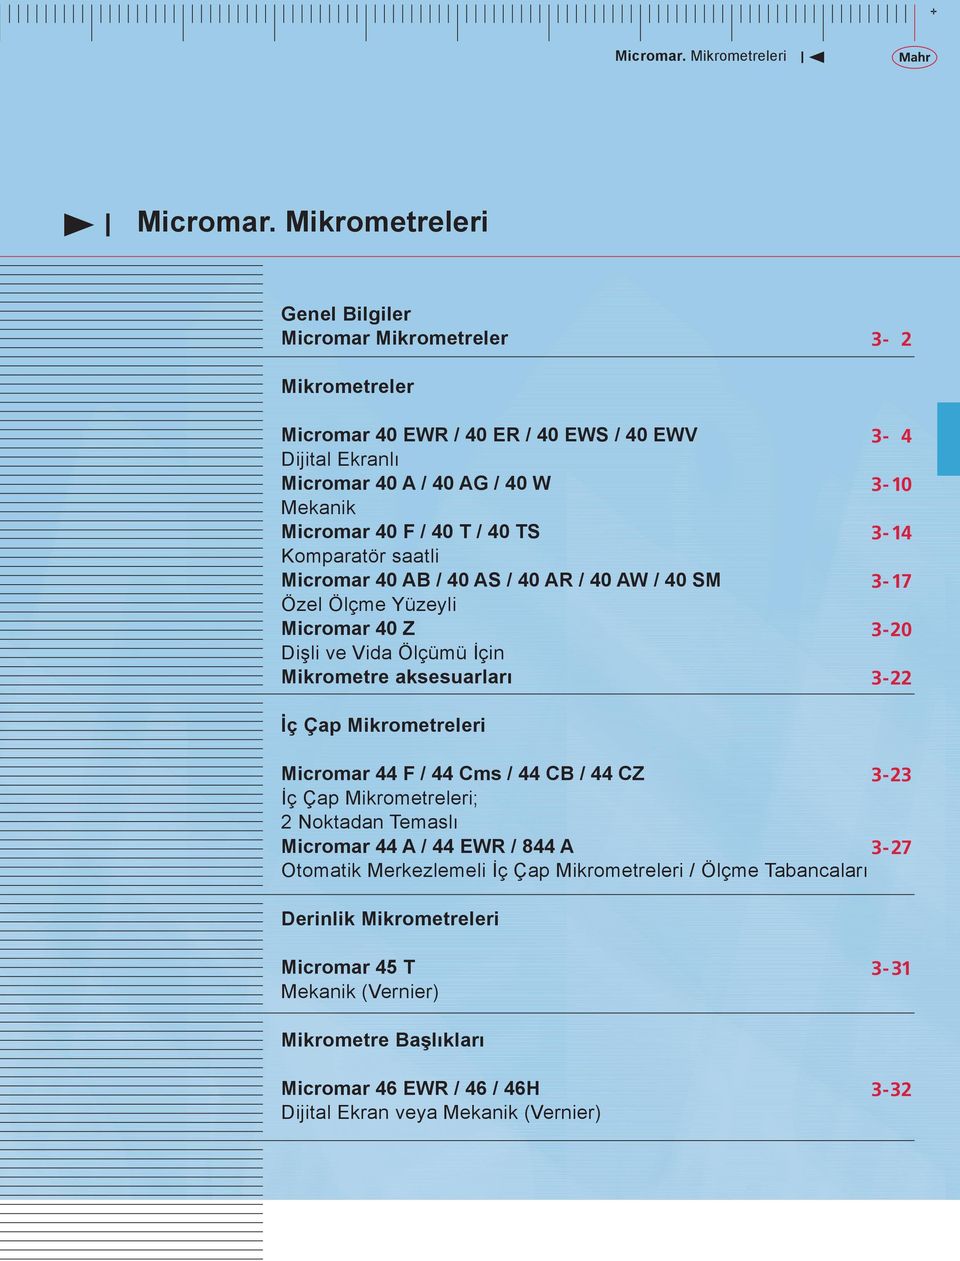 Çap Mikrometreleri Micromar 44 F / 44 Cms / 44 CB / 44 CZ 3-23 İç Çap Mikrometreleri; 2 Noktadan Temaslı Micromar 44 A / 44 EWR / 844 A 3-27 Otomatik Merkezlemeli İç Çap